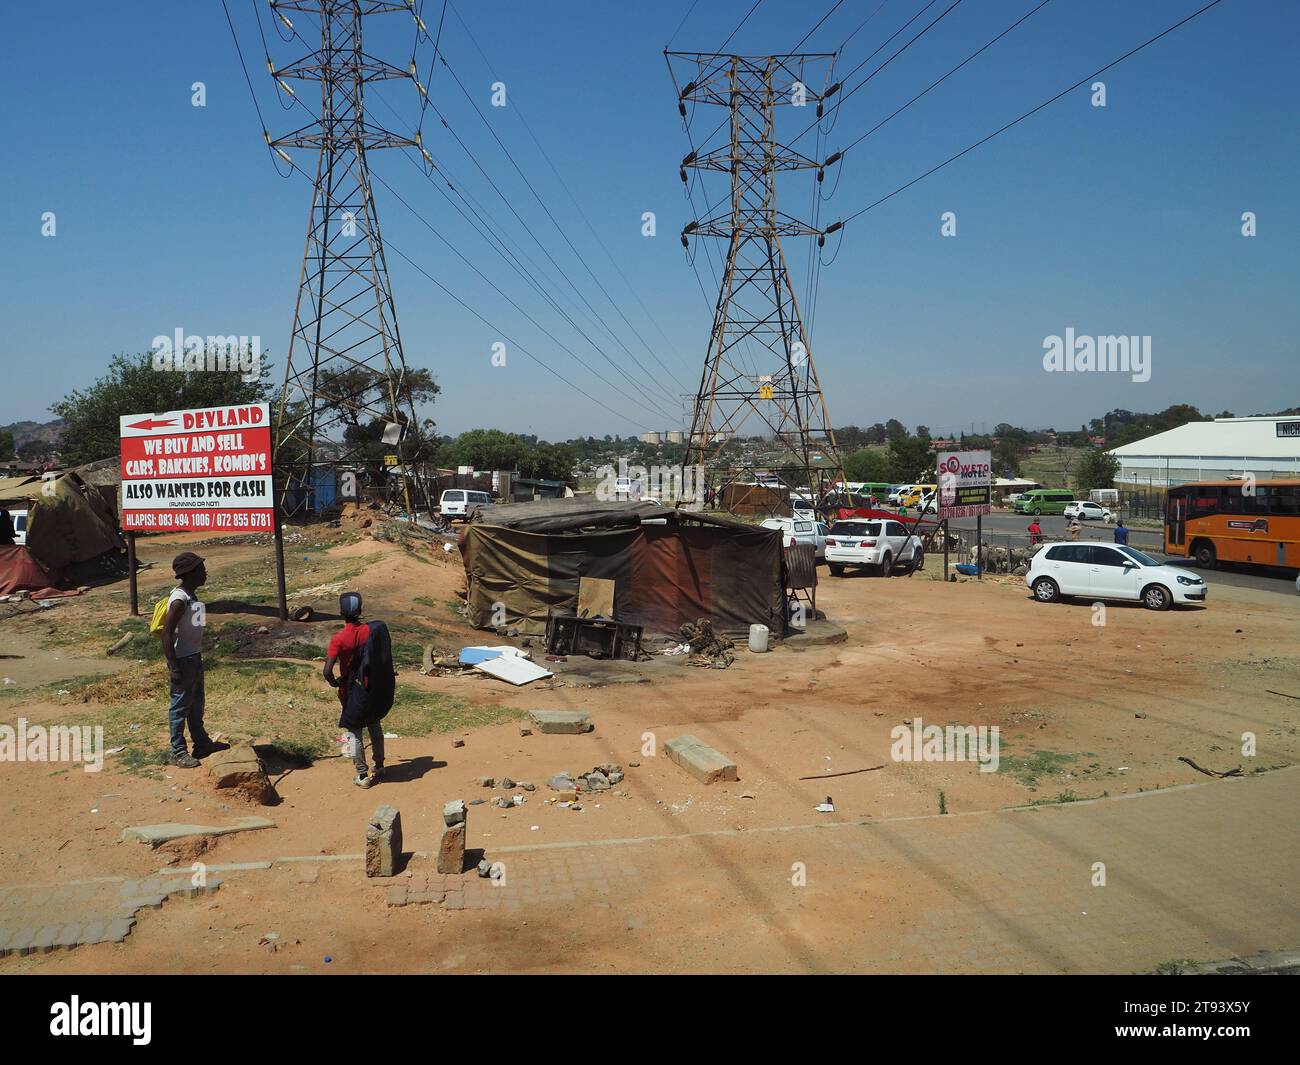 Straßenszene in Soweto Township, Provinz Gauteng, Südafrika Stockfoto